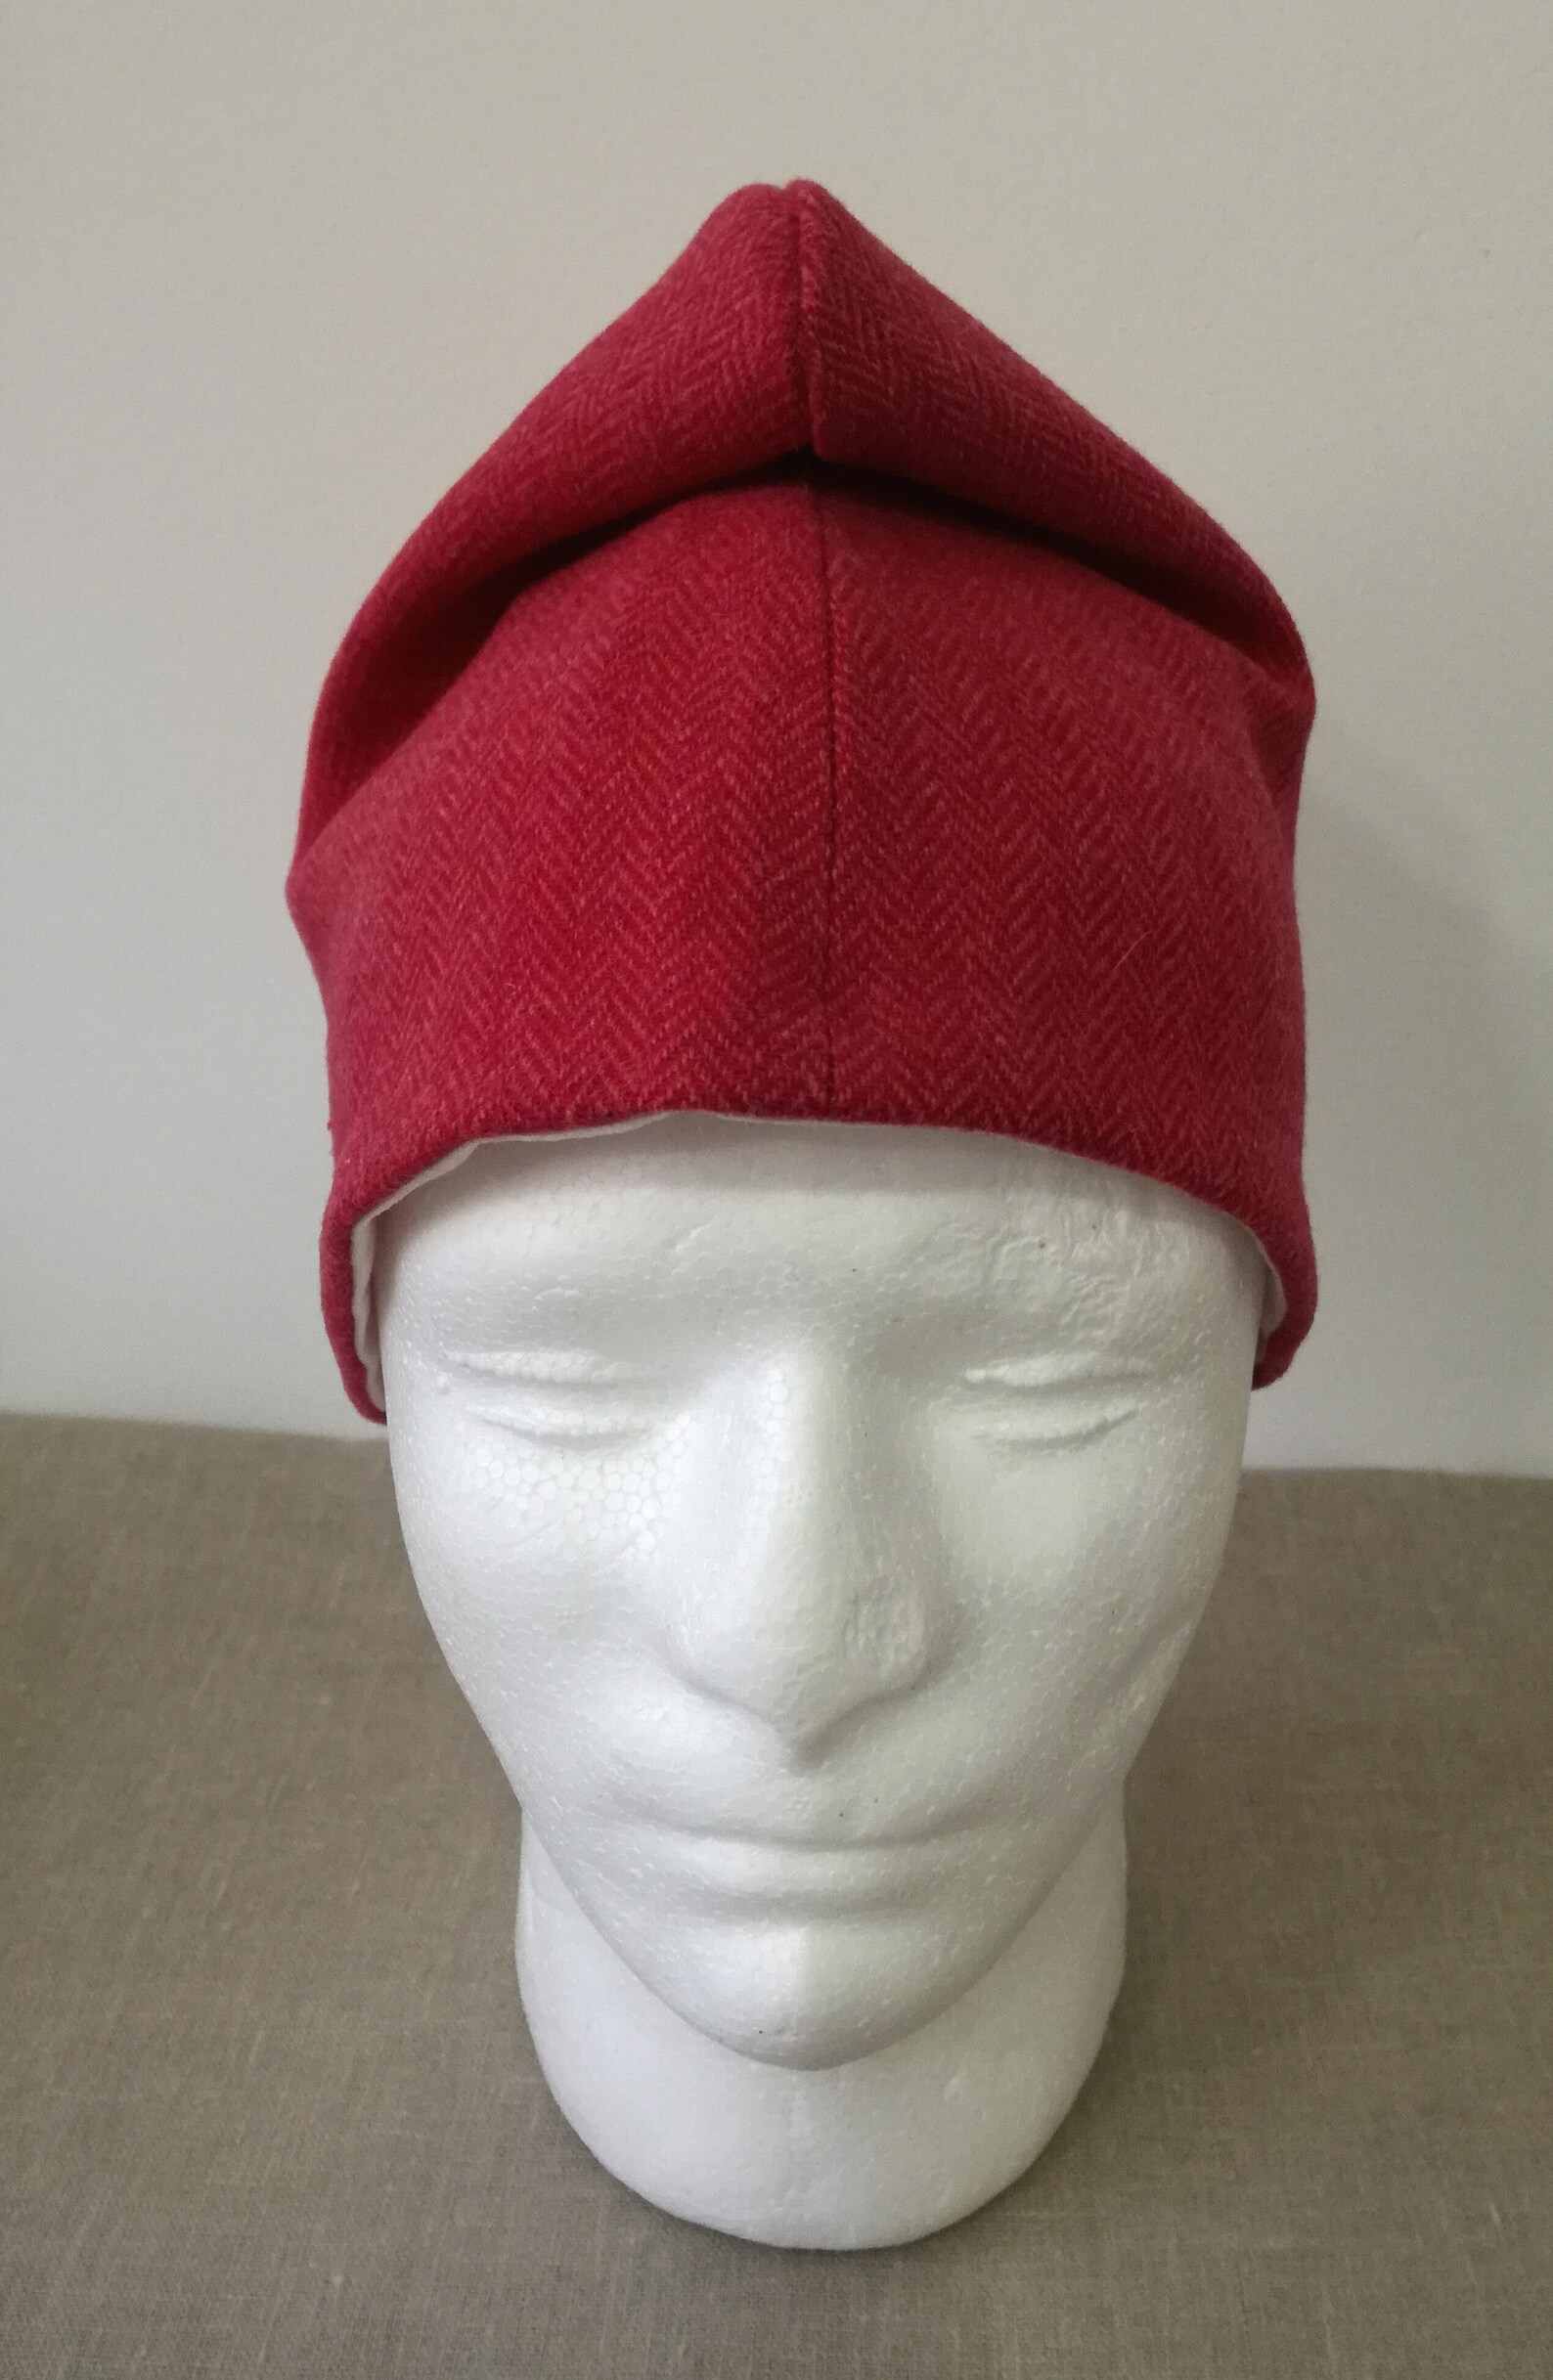 Phrygian cap made of red and pink herringbone wool fabric. | Etsy